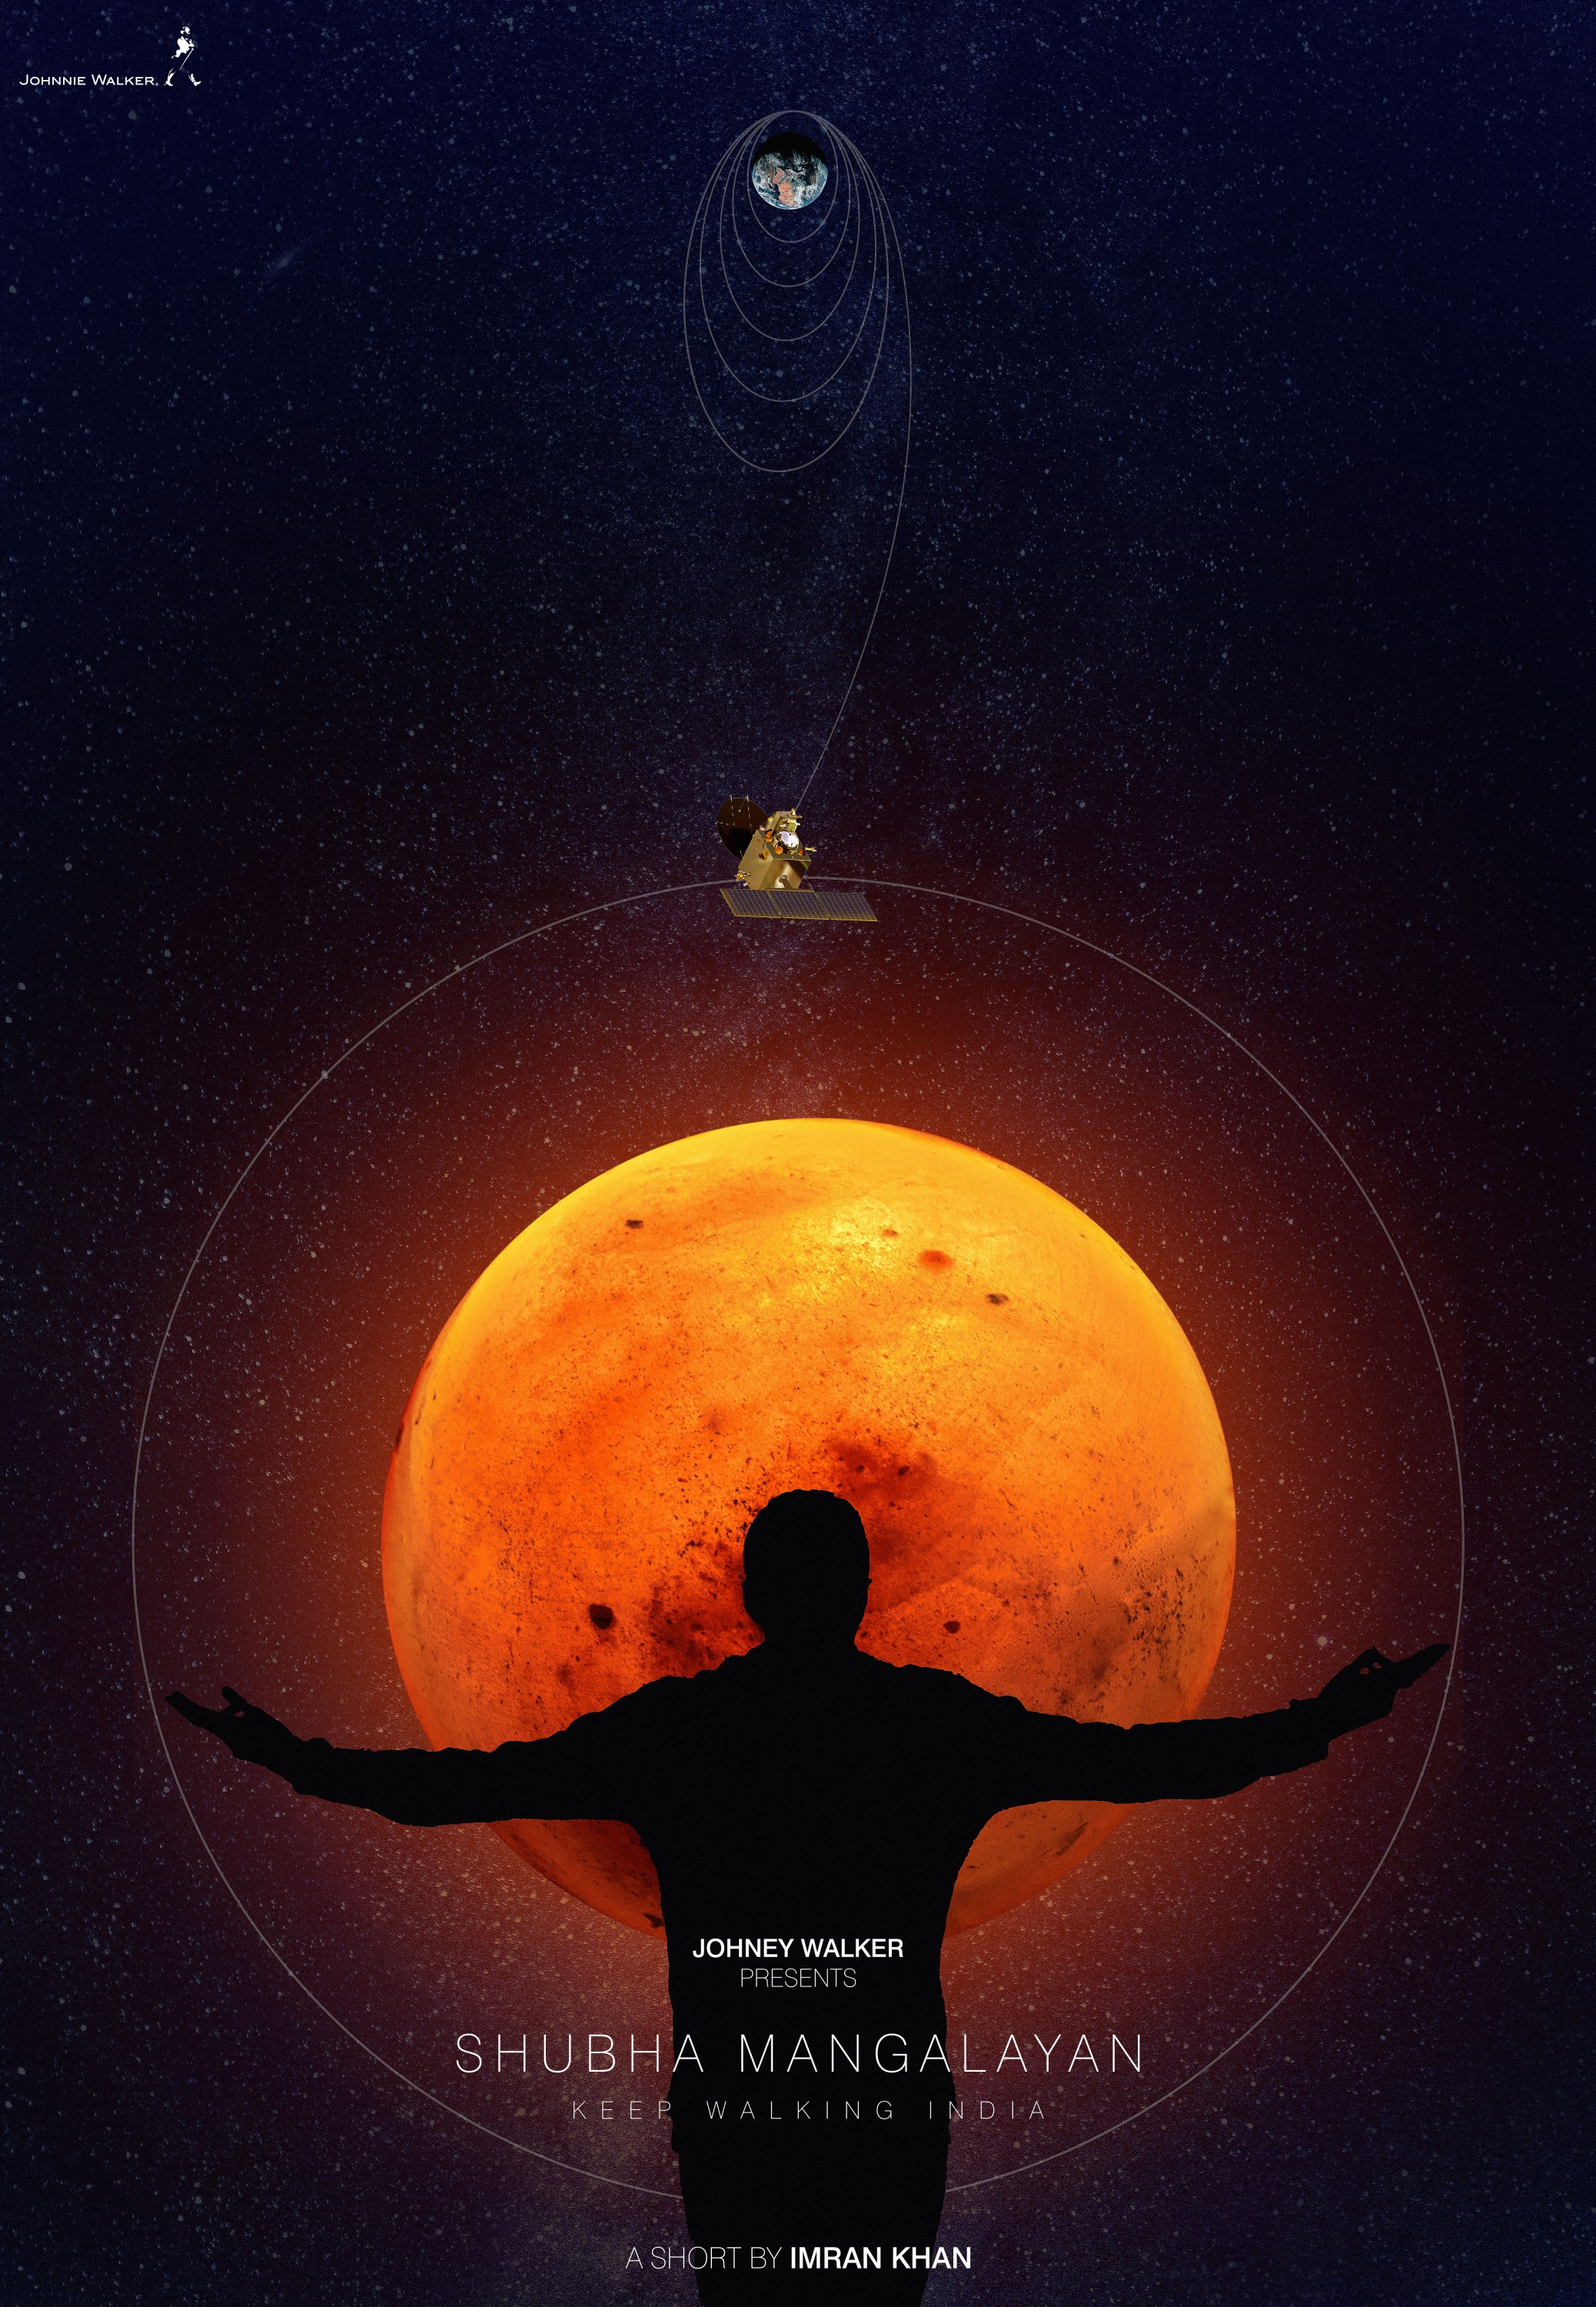 Mega Sized Movie Poster Image for Mission Mars: Keep Walking India